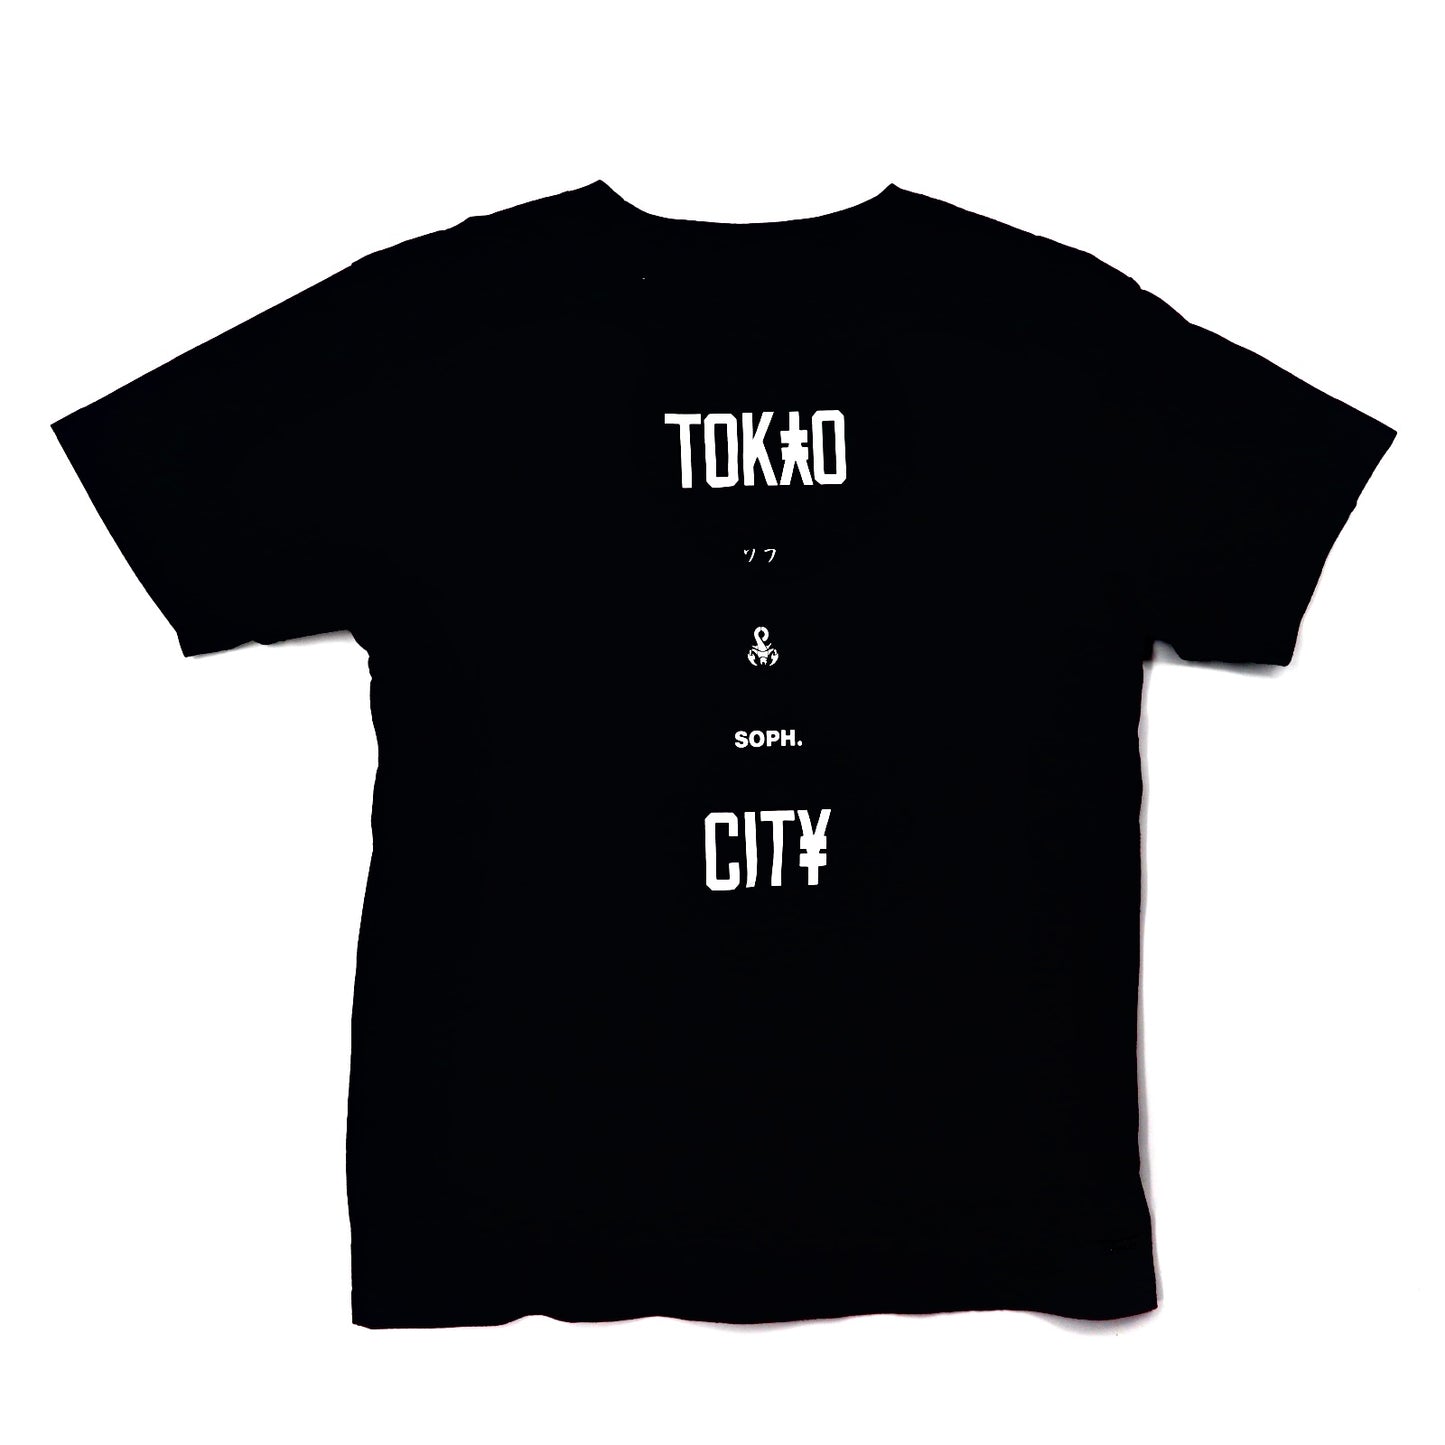 SOPHNET. クルーネックTシャツ M ブラック TOKYO CITY